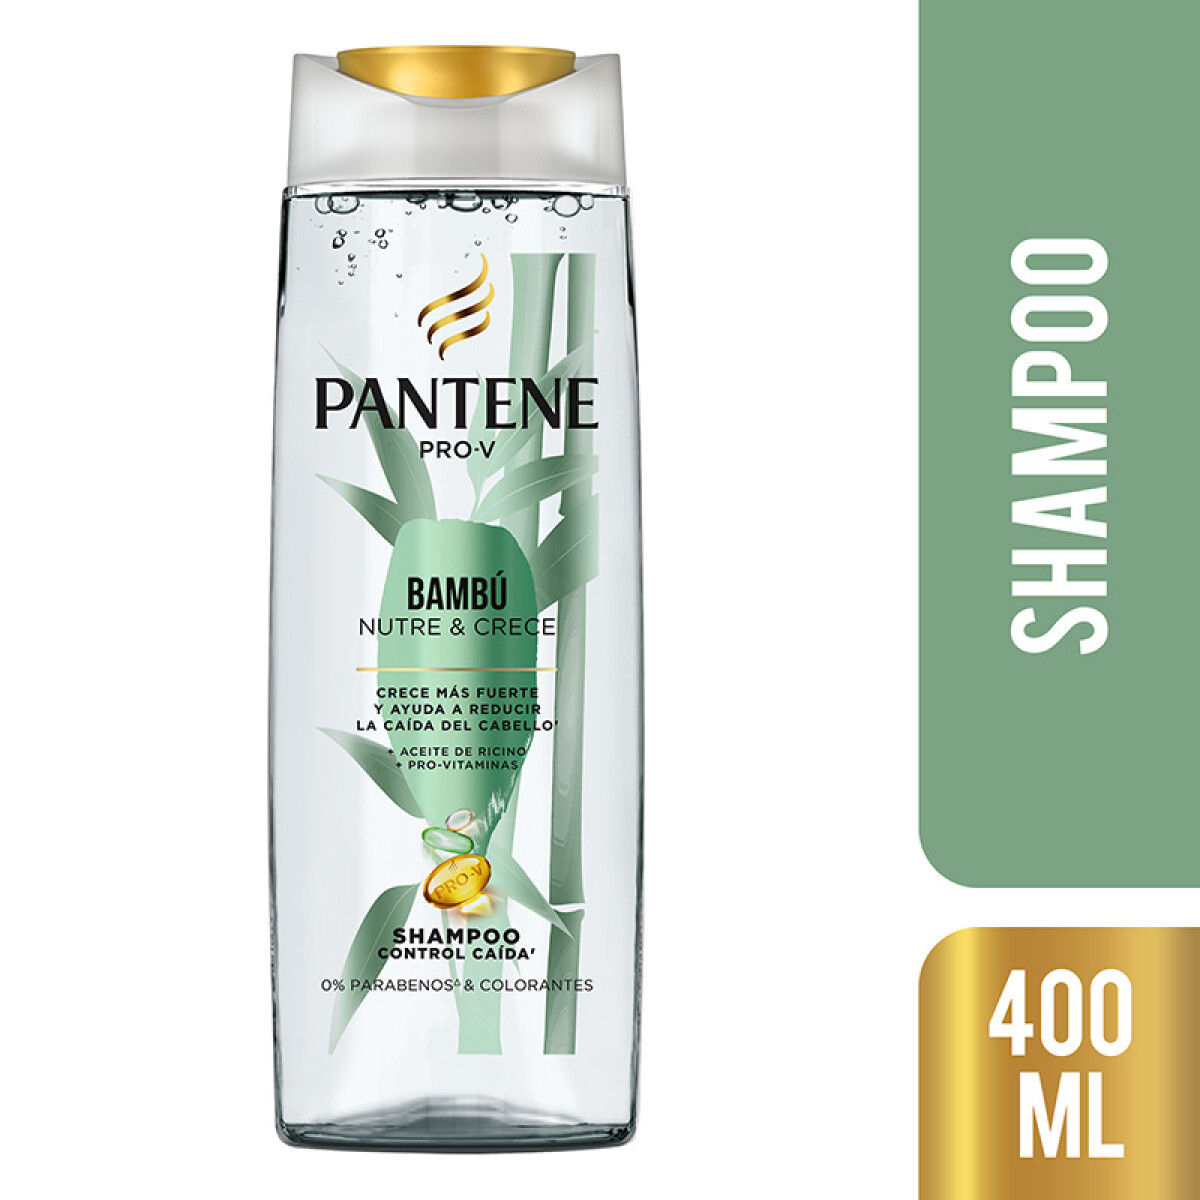 Pantene shampoo Bambú 400 ml 